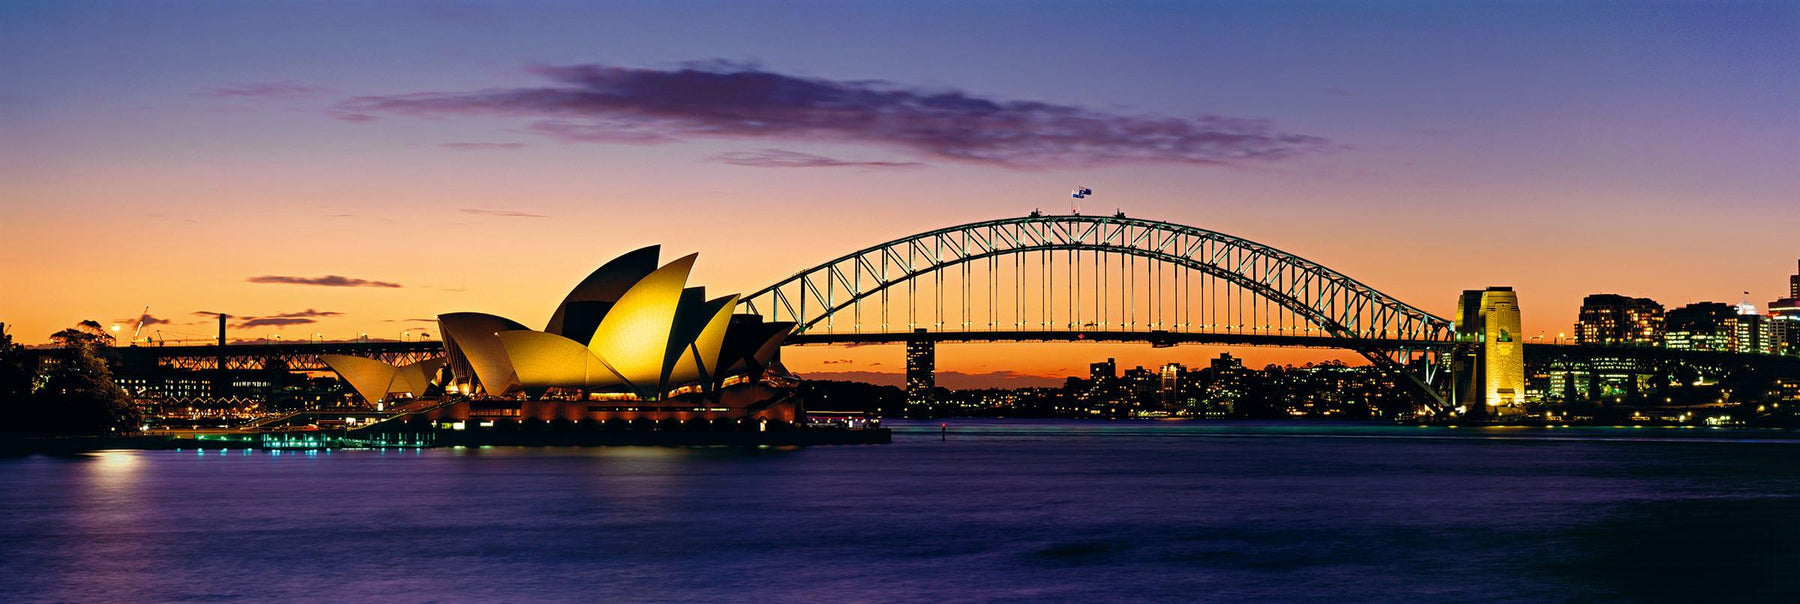 Sydney Harbor Bridge stretching over the harbor to the Sydney Opera House at sunset